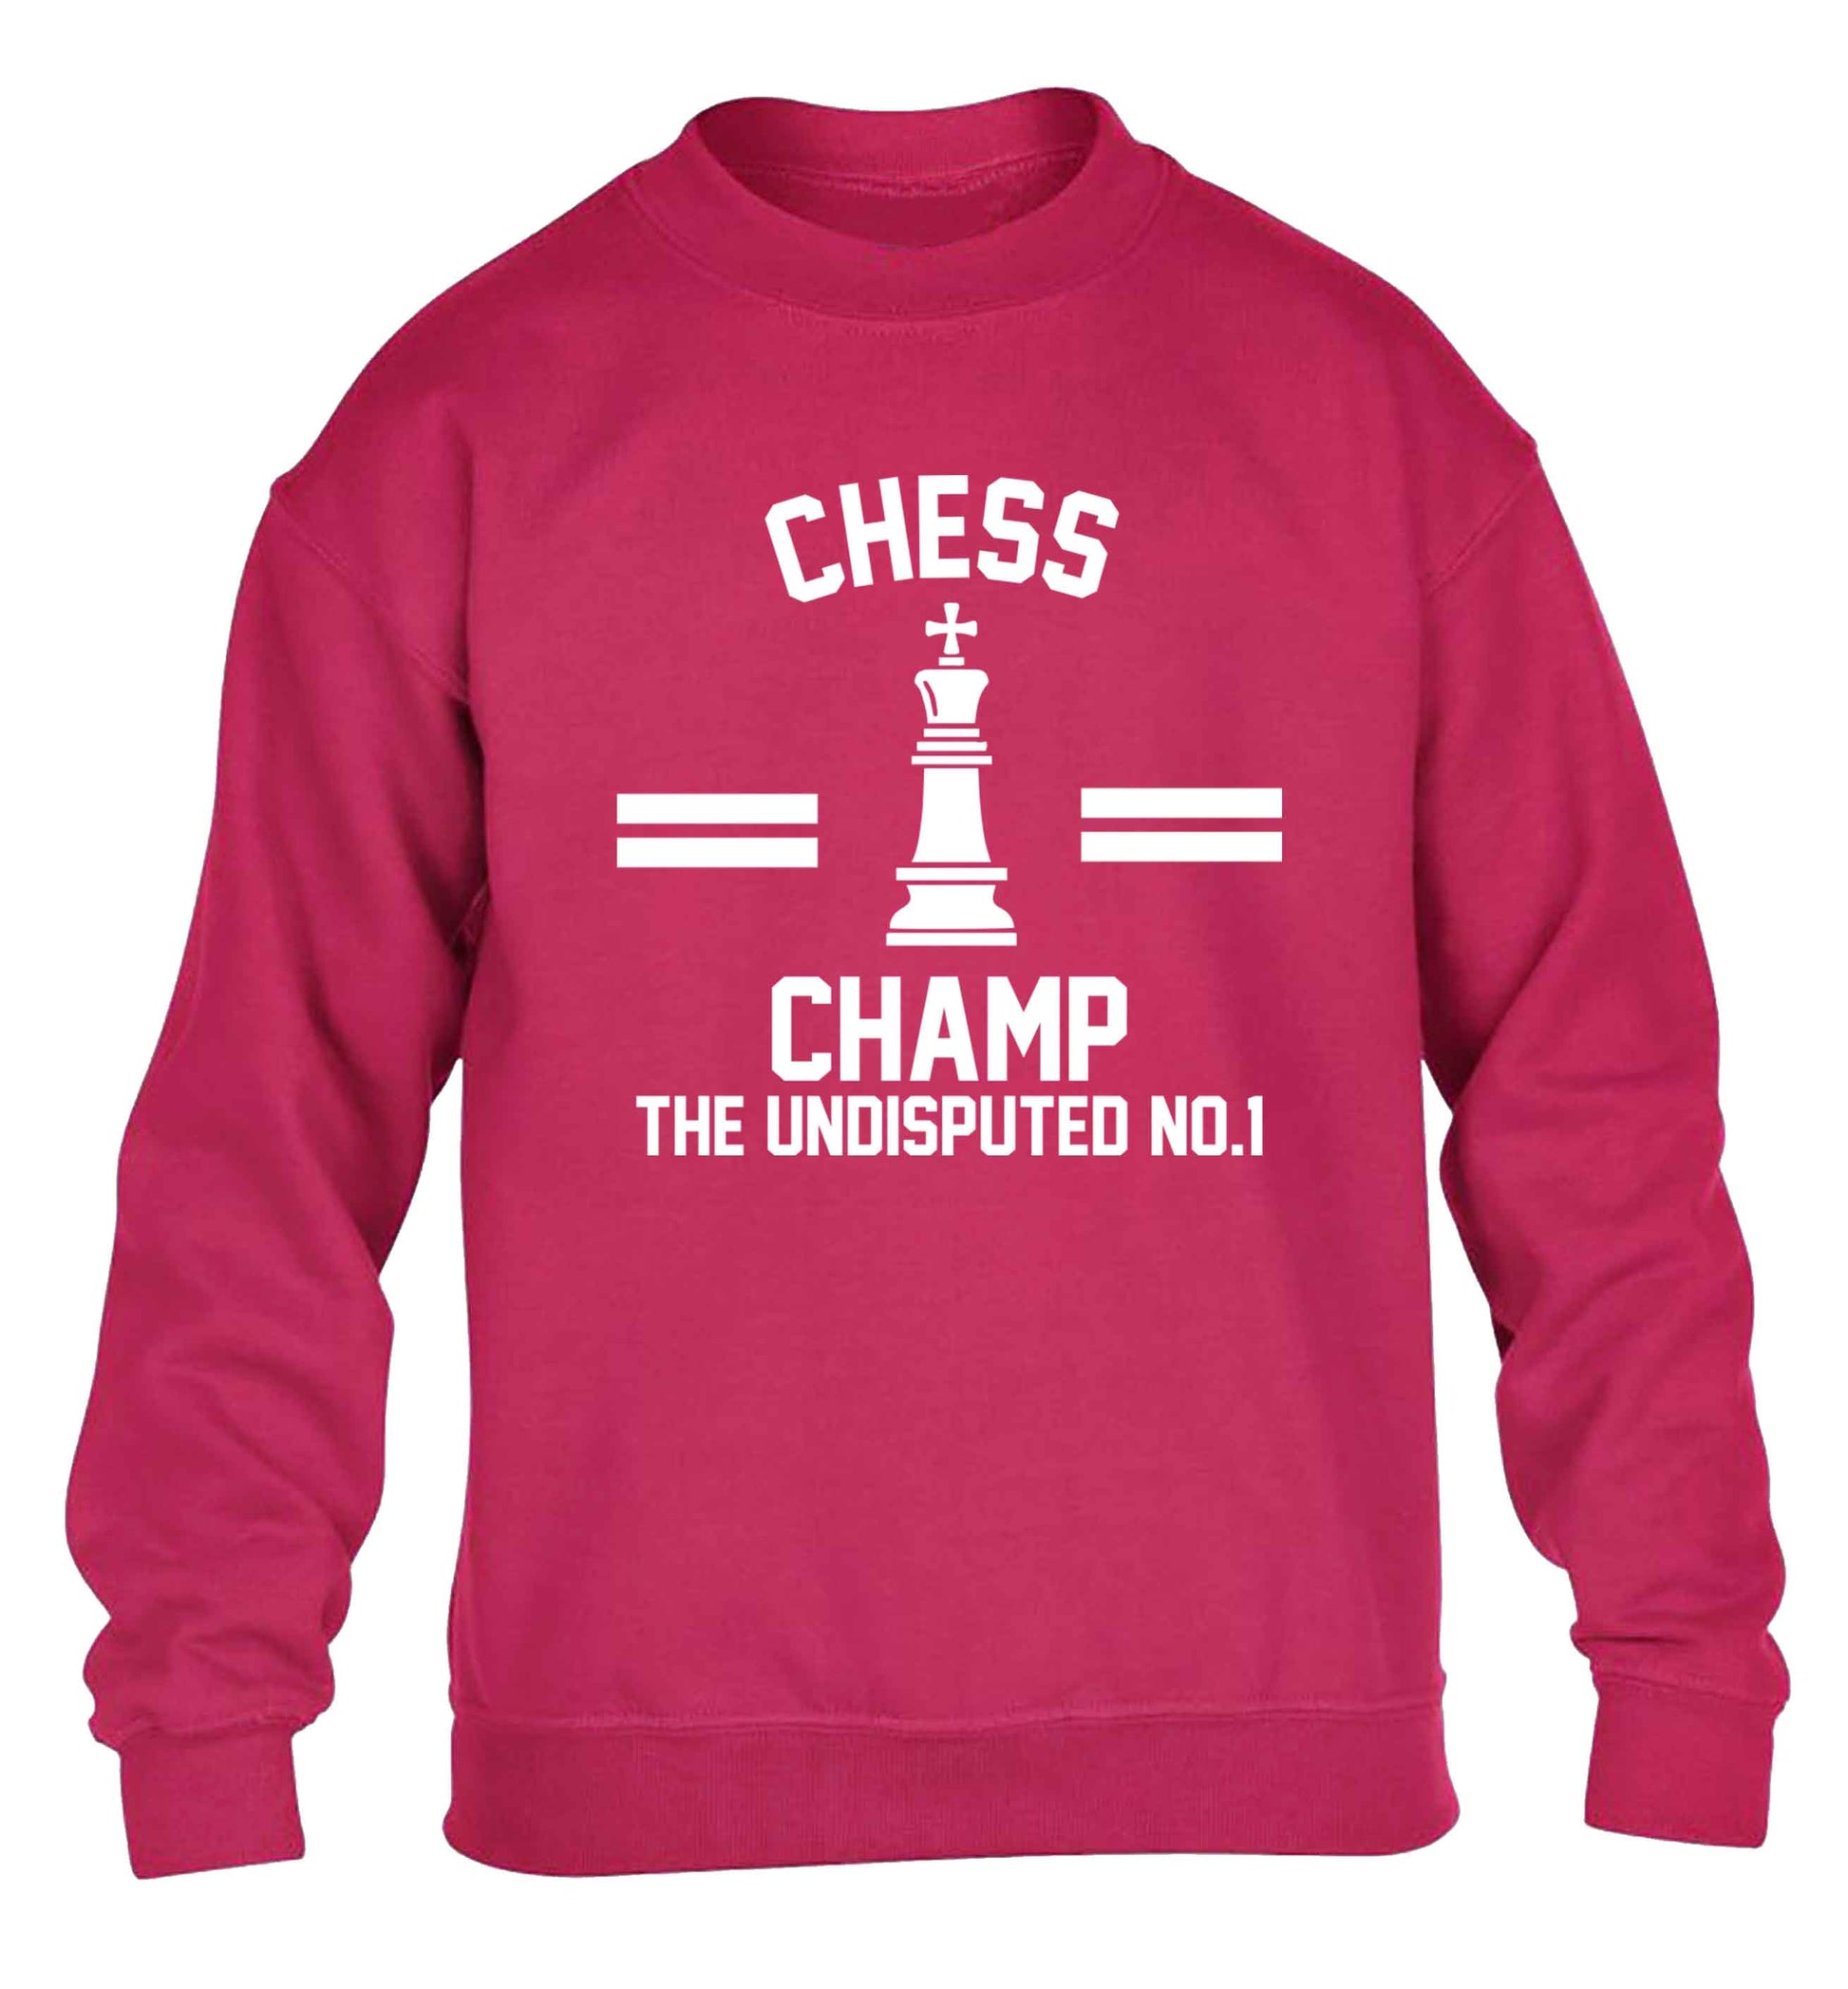 Undisputed chess championship no.1  children's pink sweater 12-13 Years